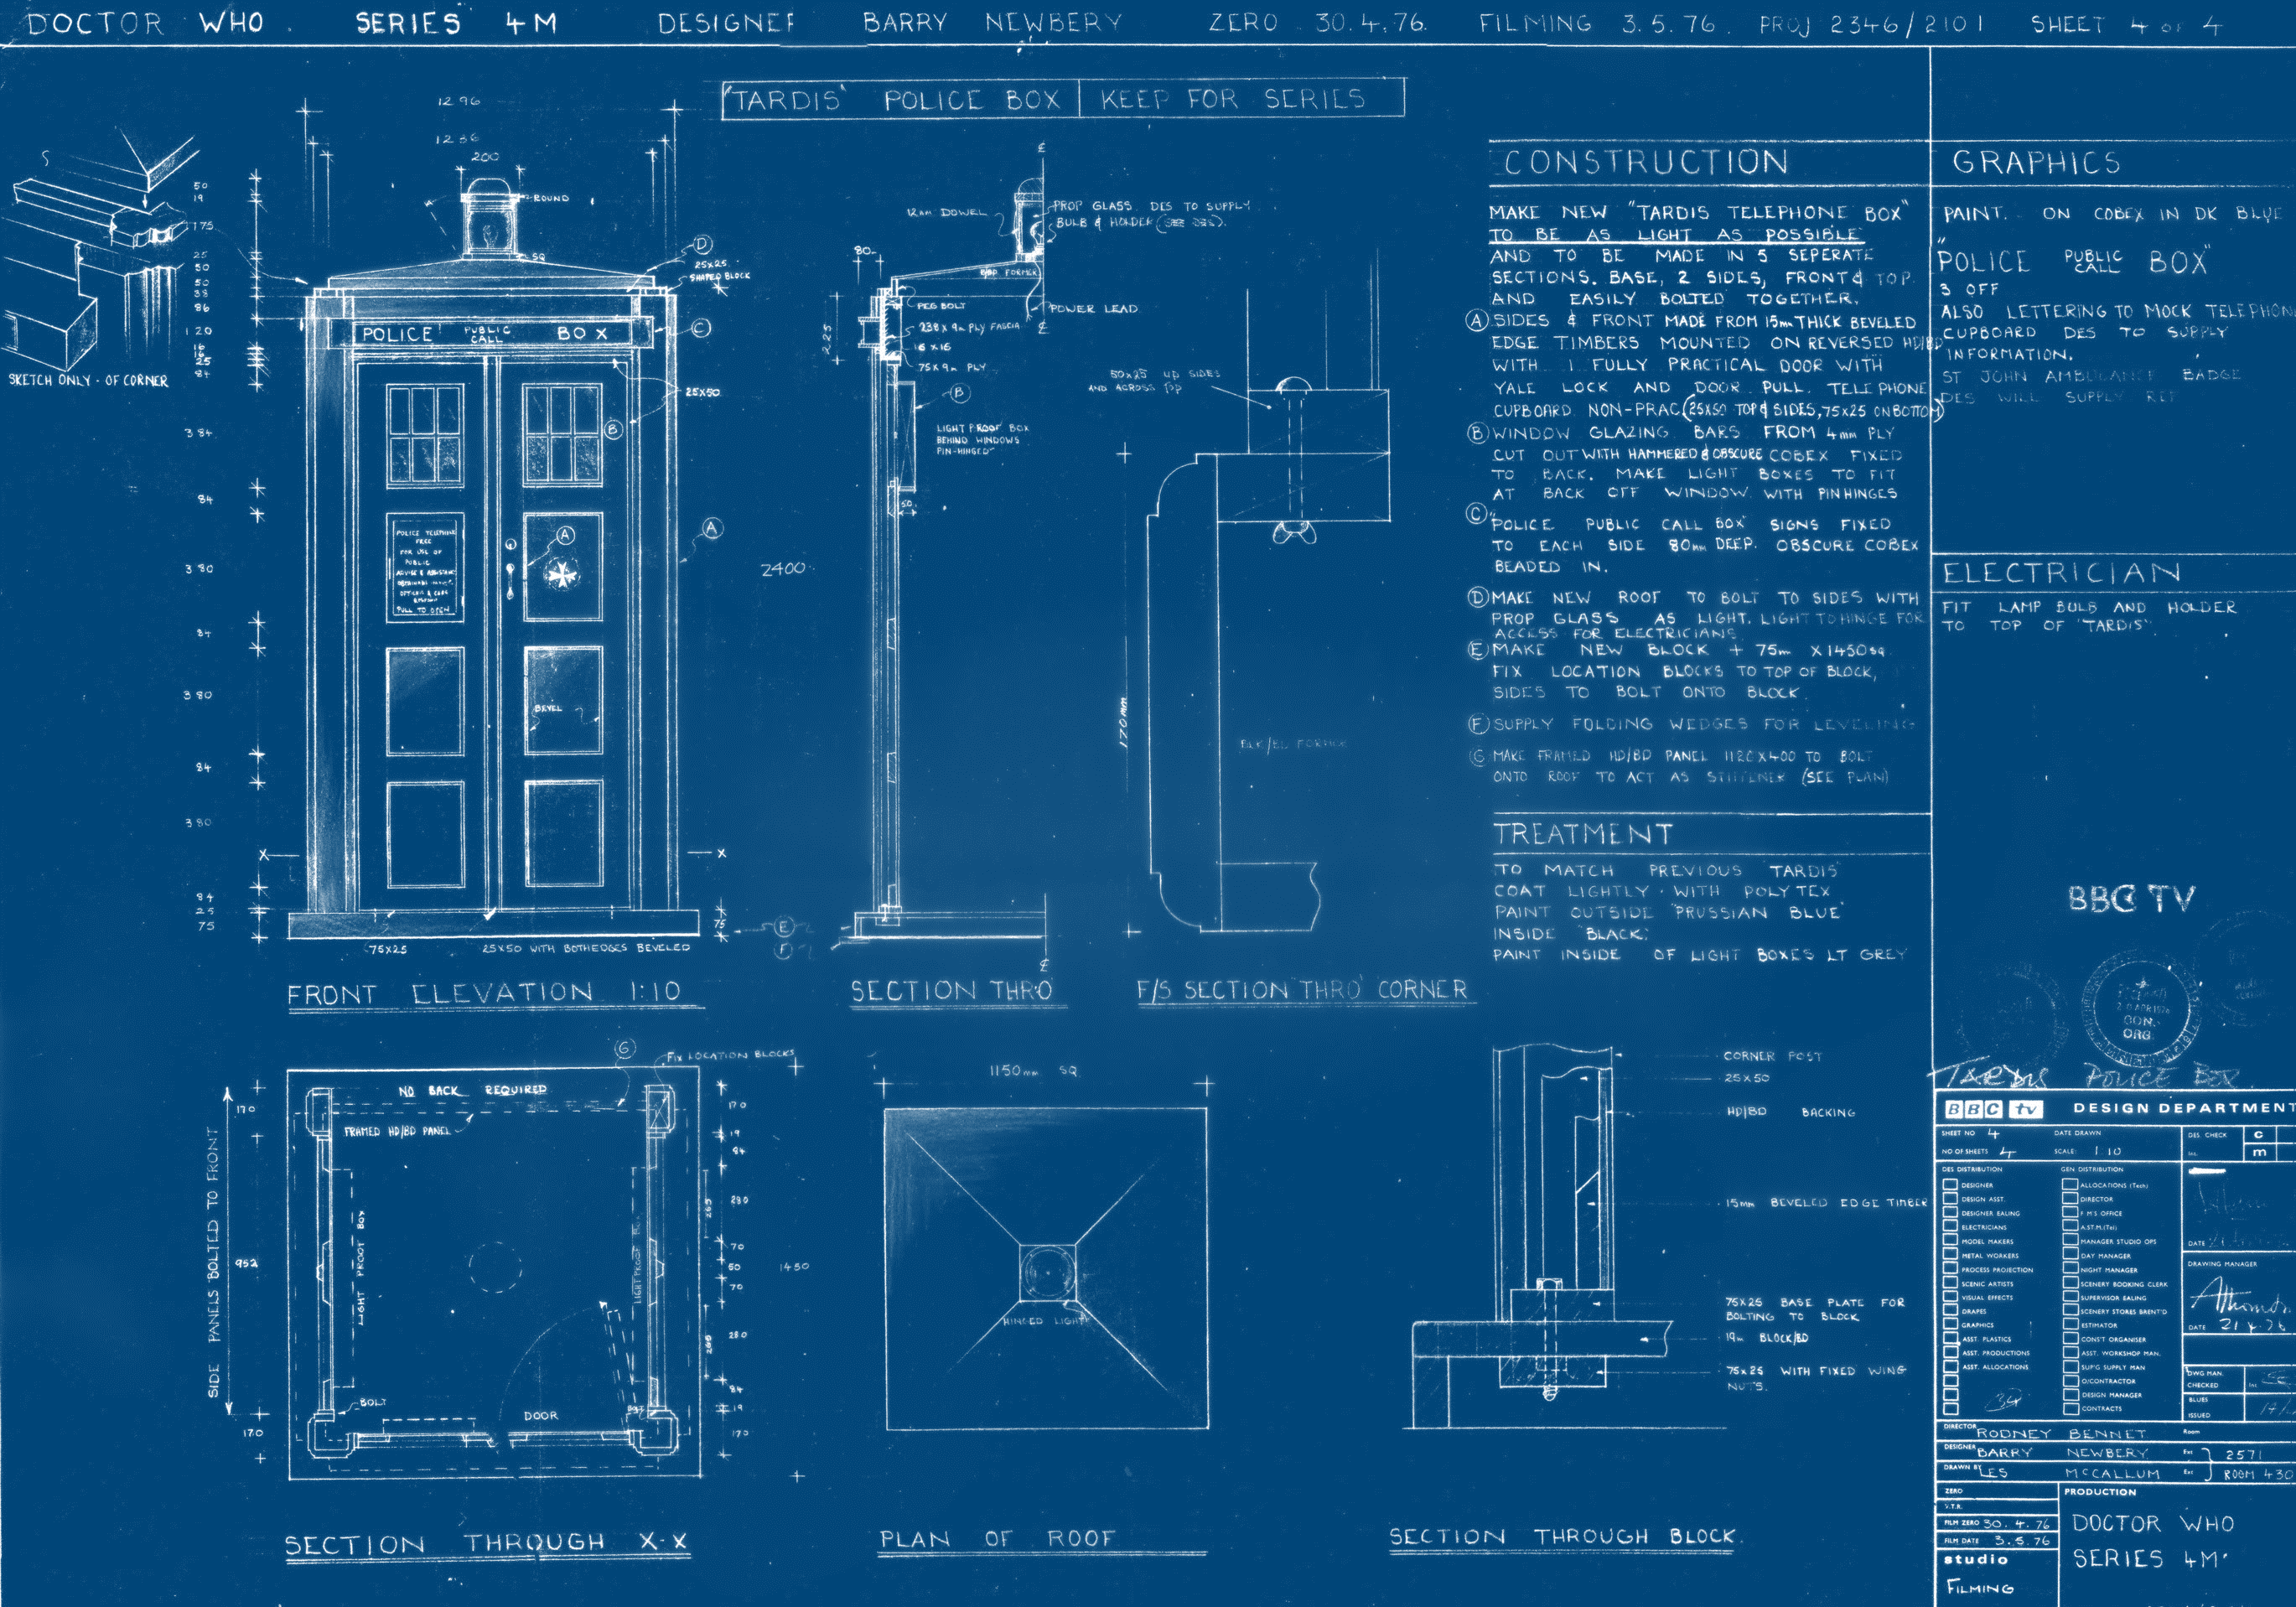 I made a desktop wallpaper of the Newbery TARDIS 4th Doctor